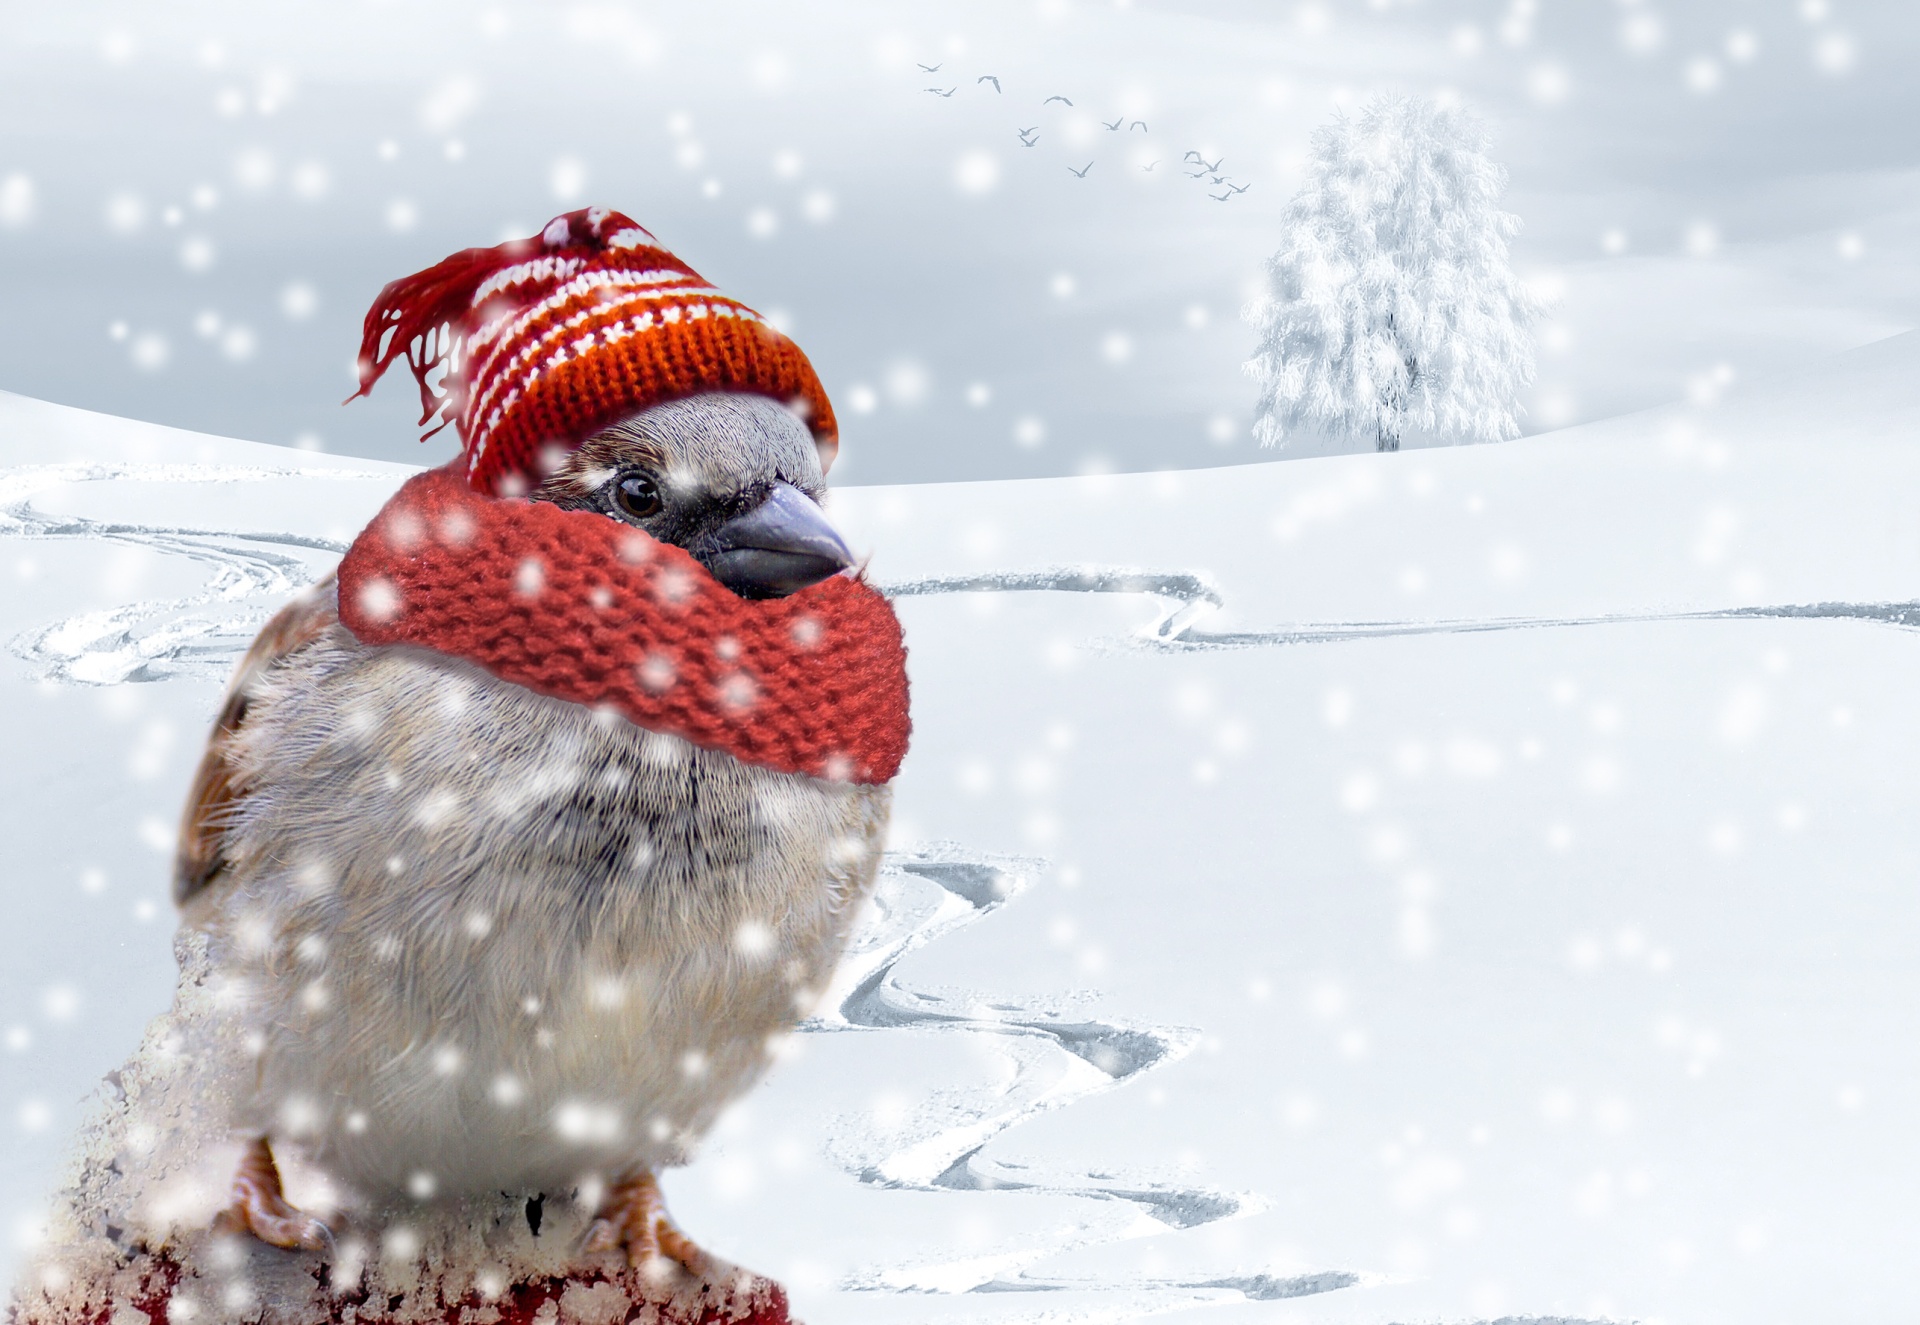 5 servilletas zorro nieve lechuzas pájaro liebres serviettentechnik invierno hombre de nieve